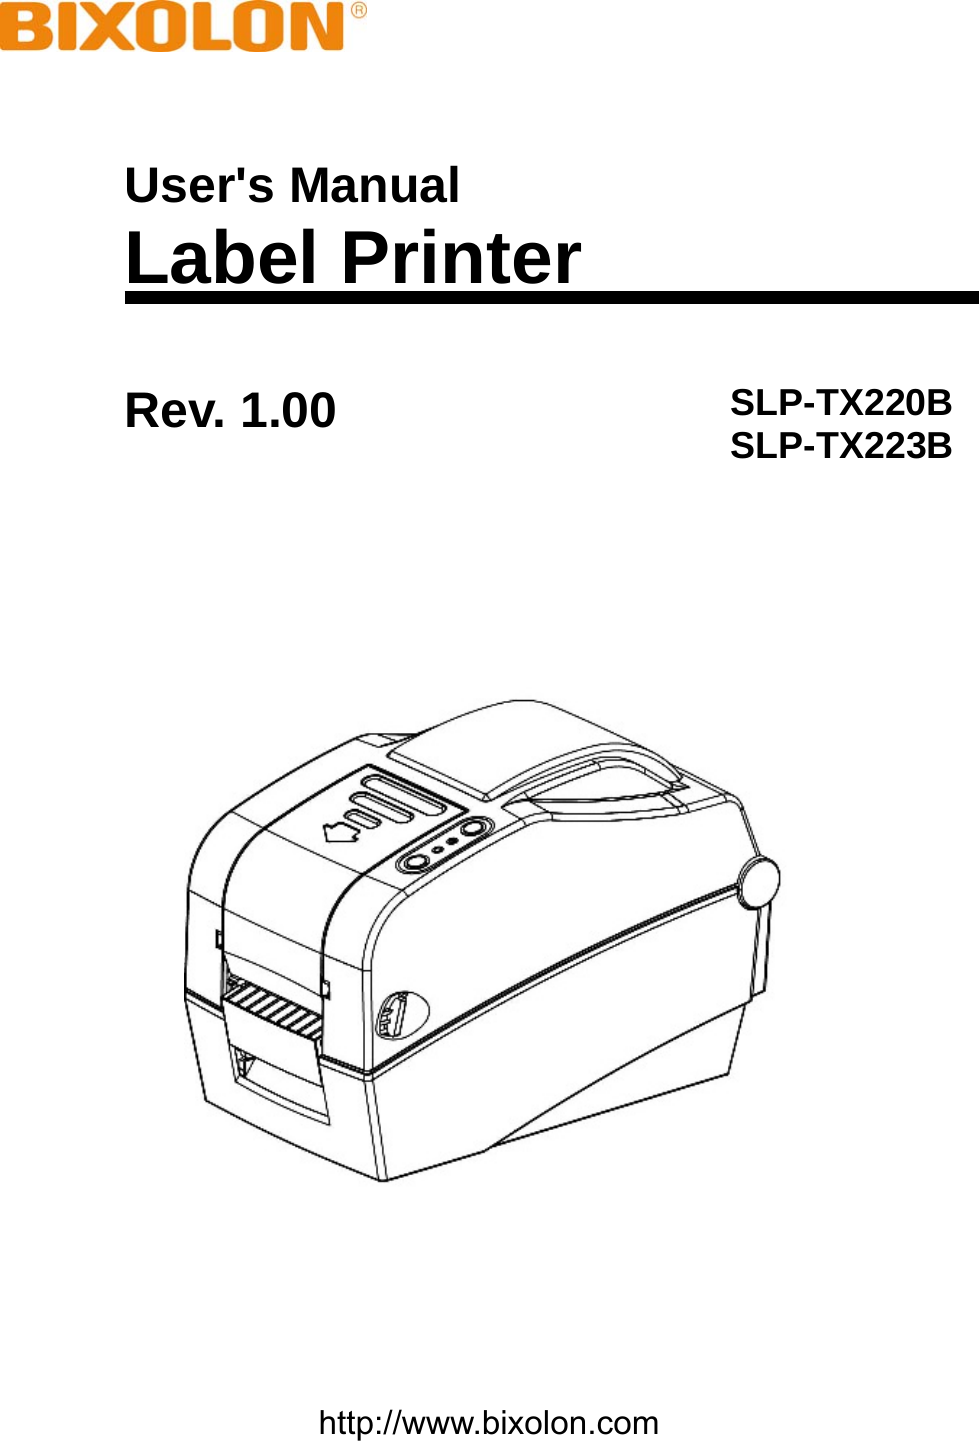    User&apos;s Manual Label Printer Rev. 1.00 SLP-TX220B SLP-TX223B    http://www.bixolon.com 